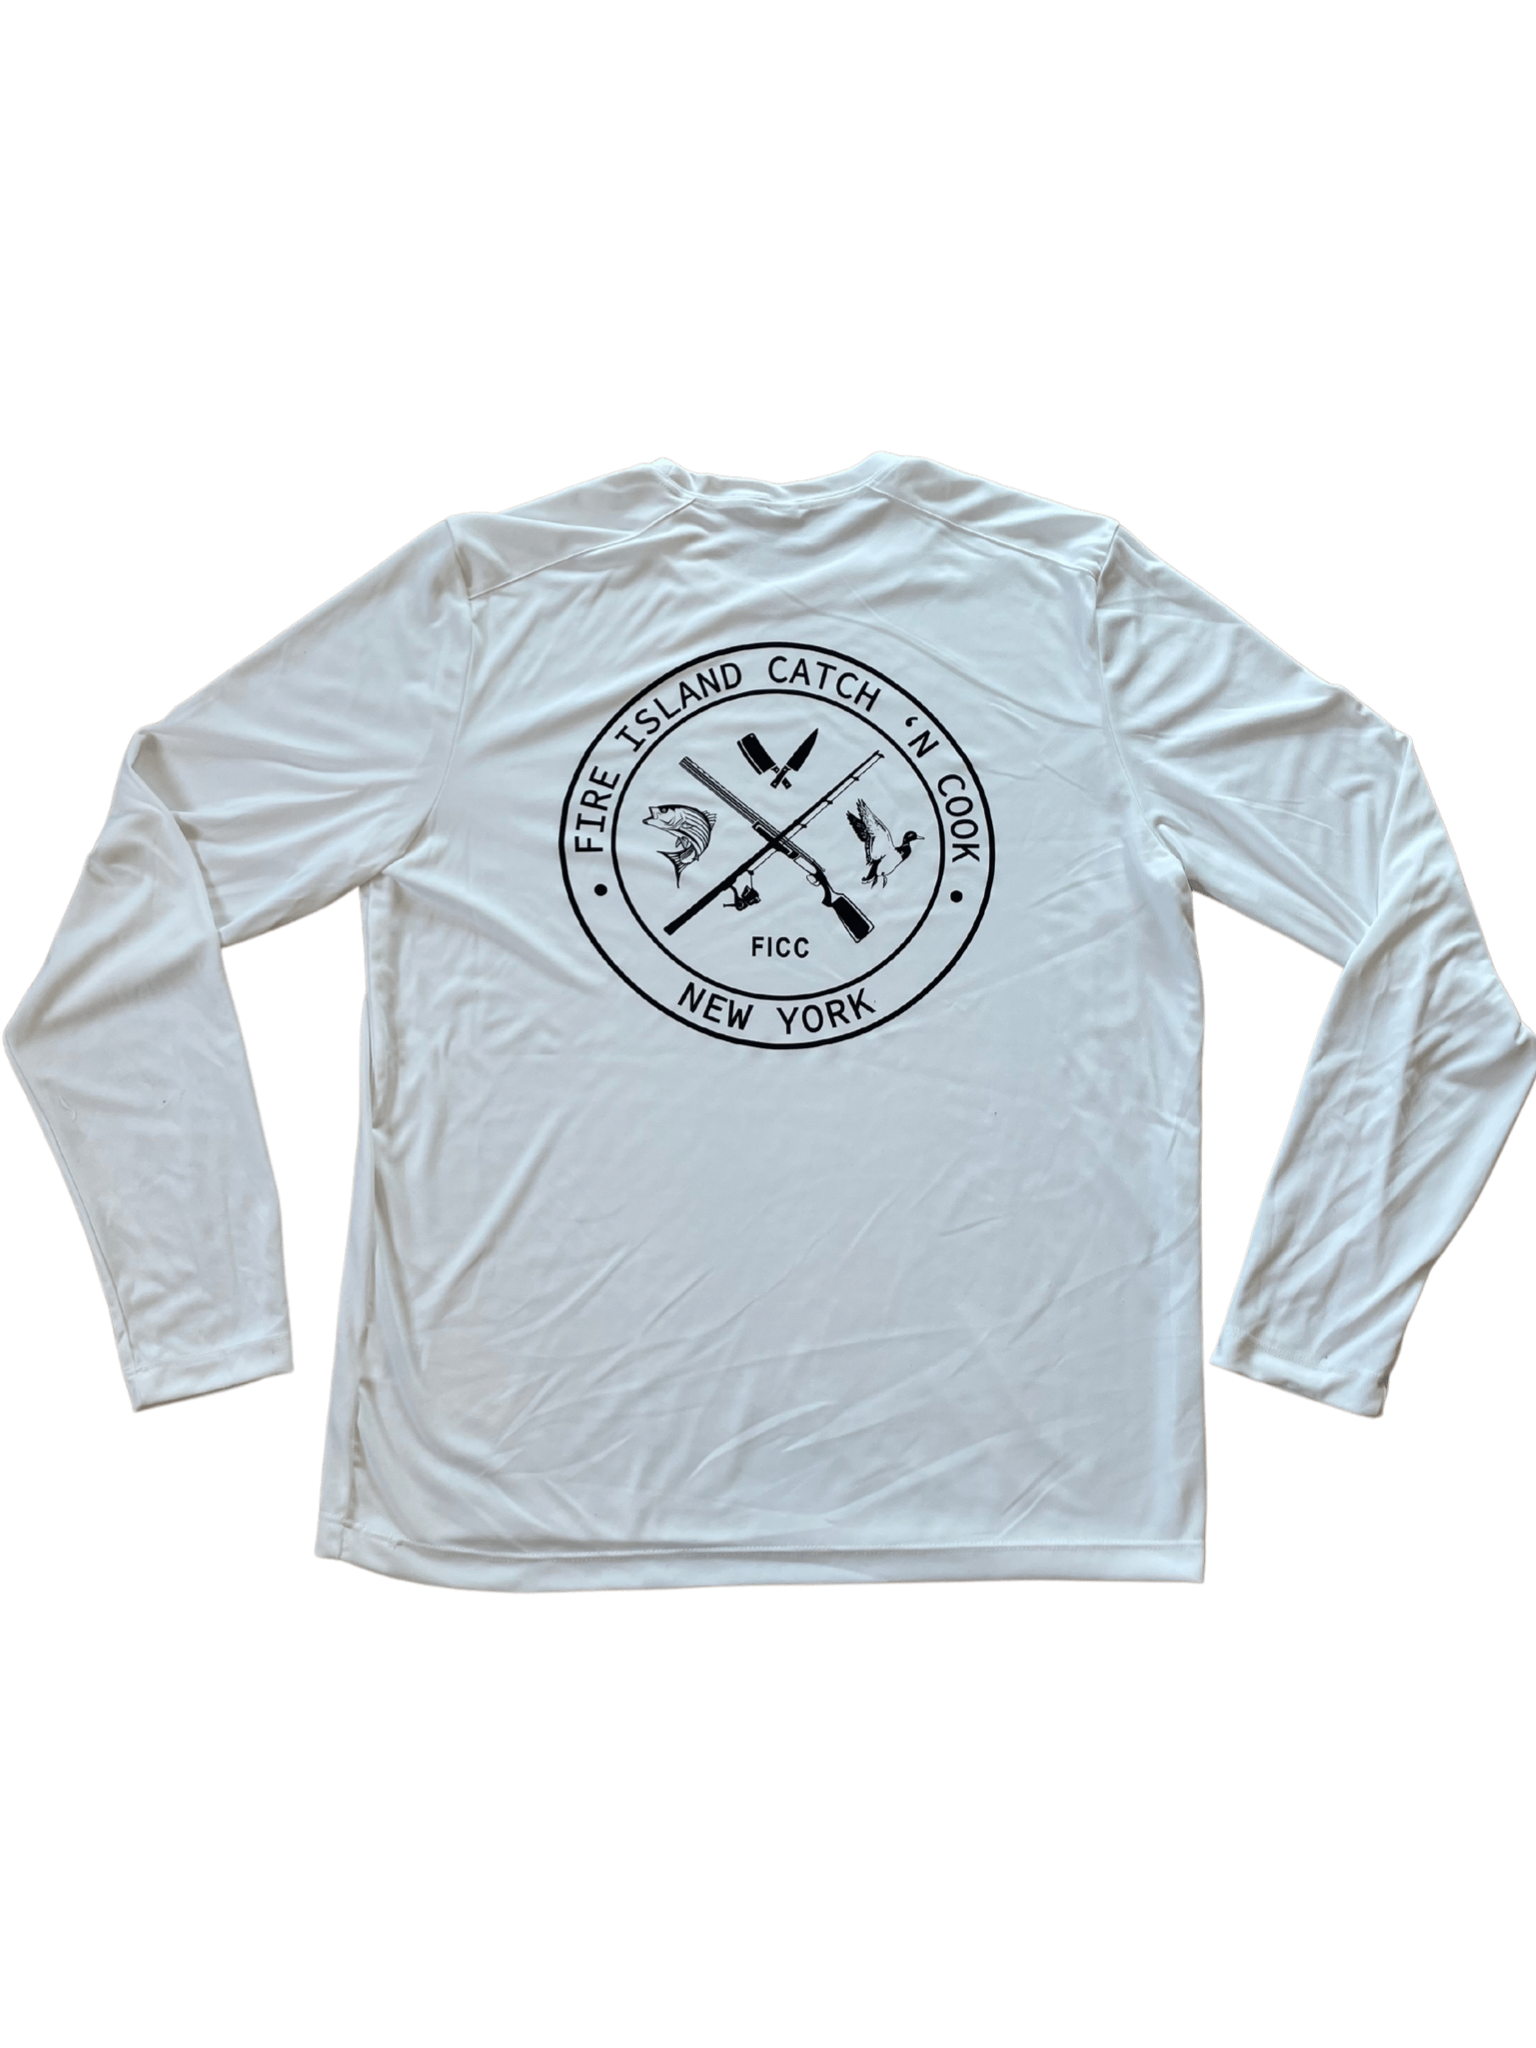 SurfmonkeyGear Bluewater Predator Fishing Team Shirts - Performance Shirt - Fishing Shirt Extra Large / White